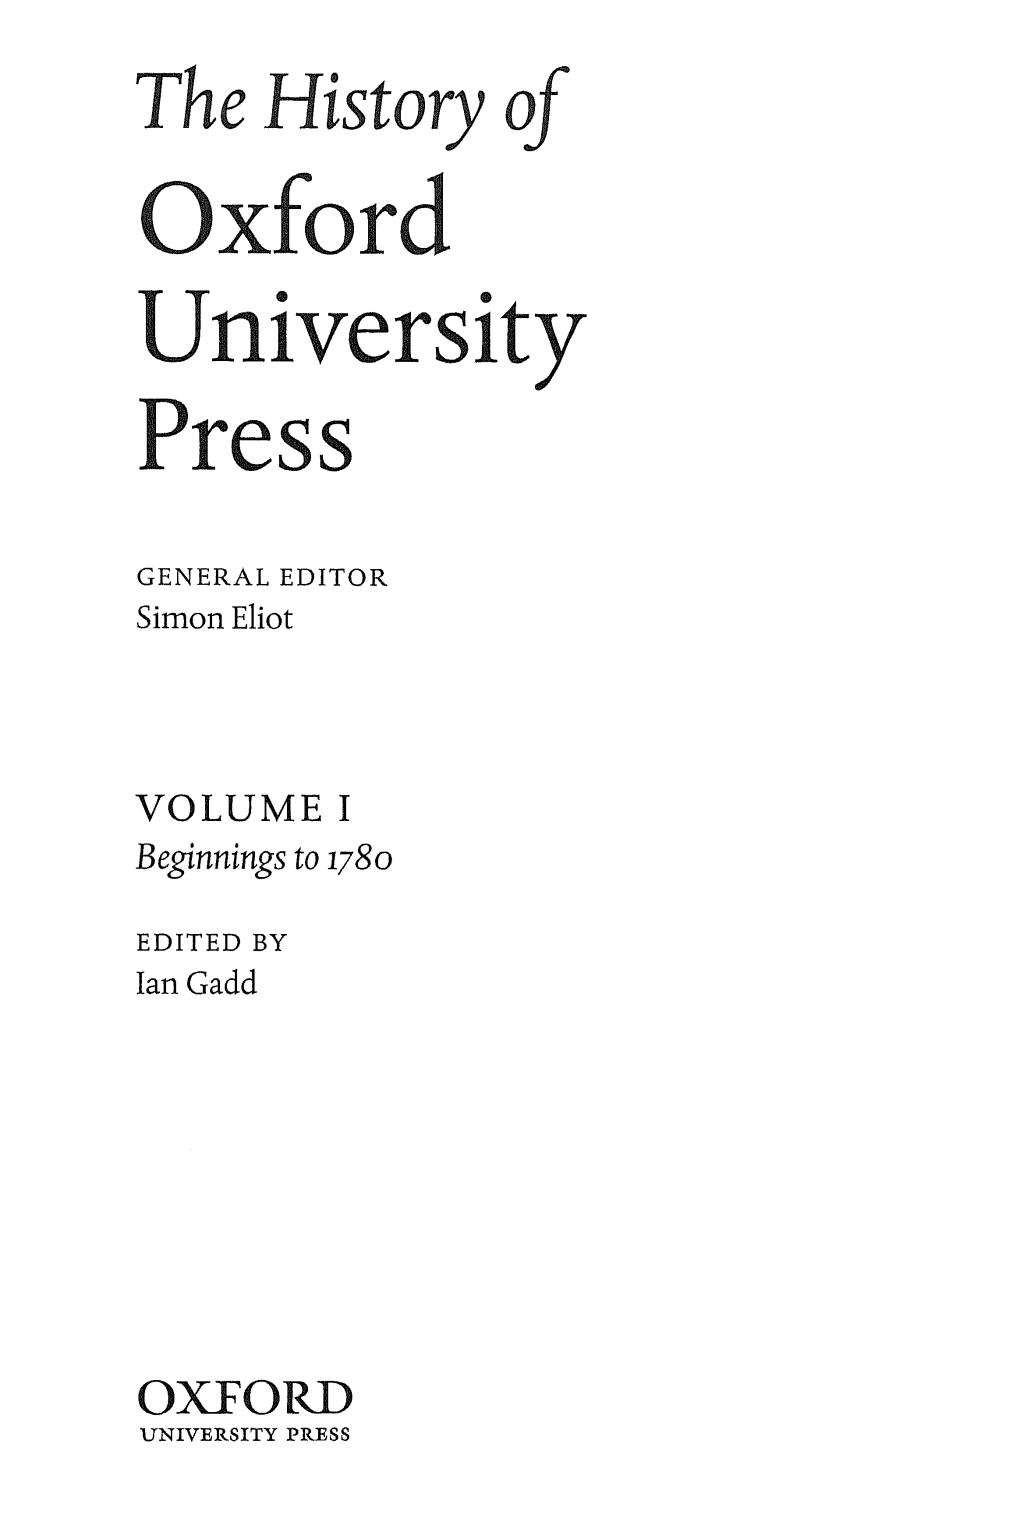 University Press